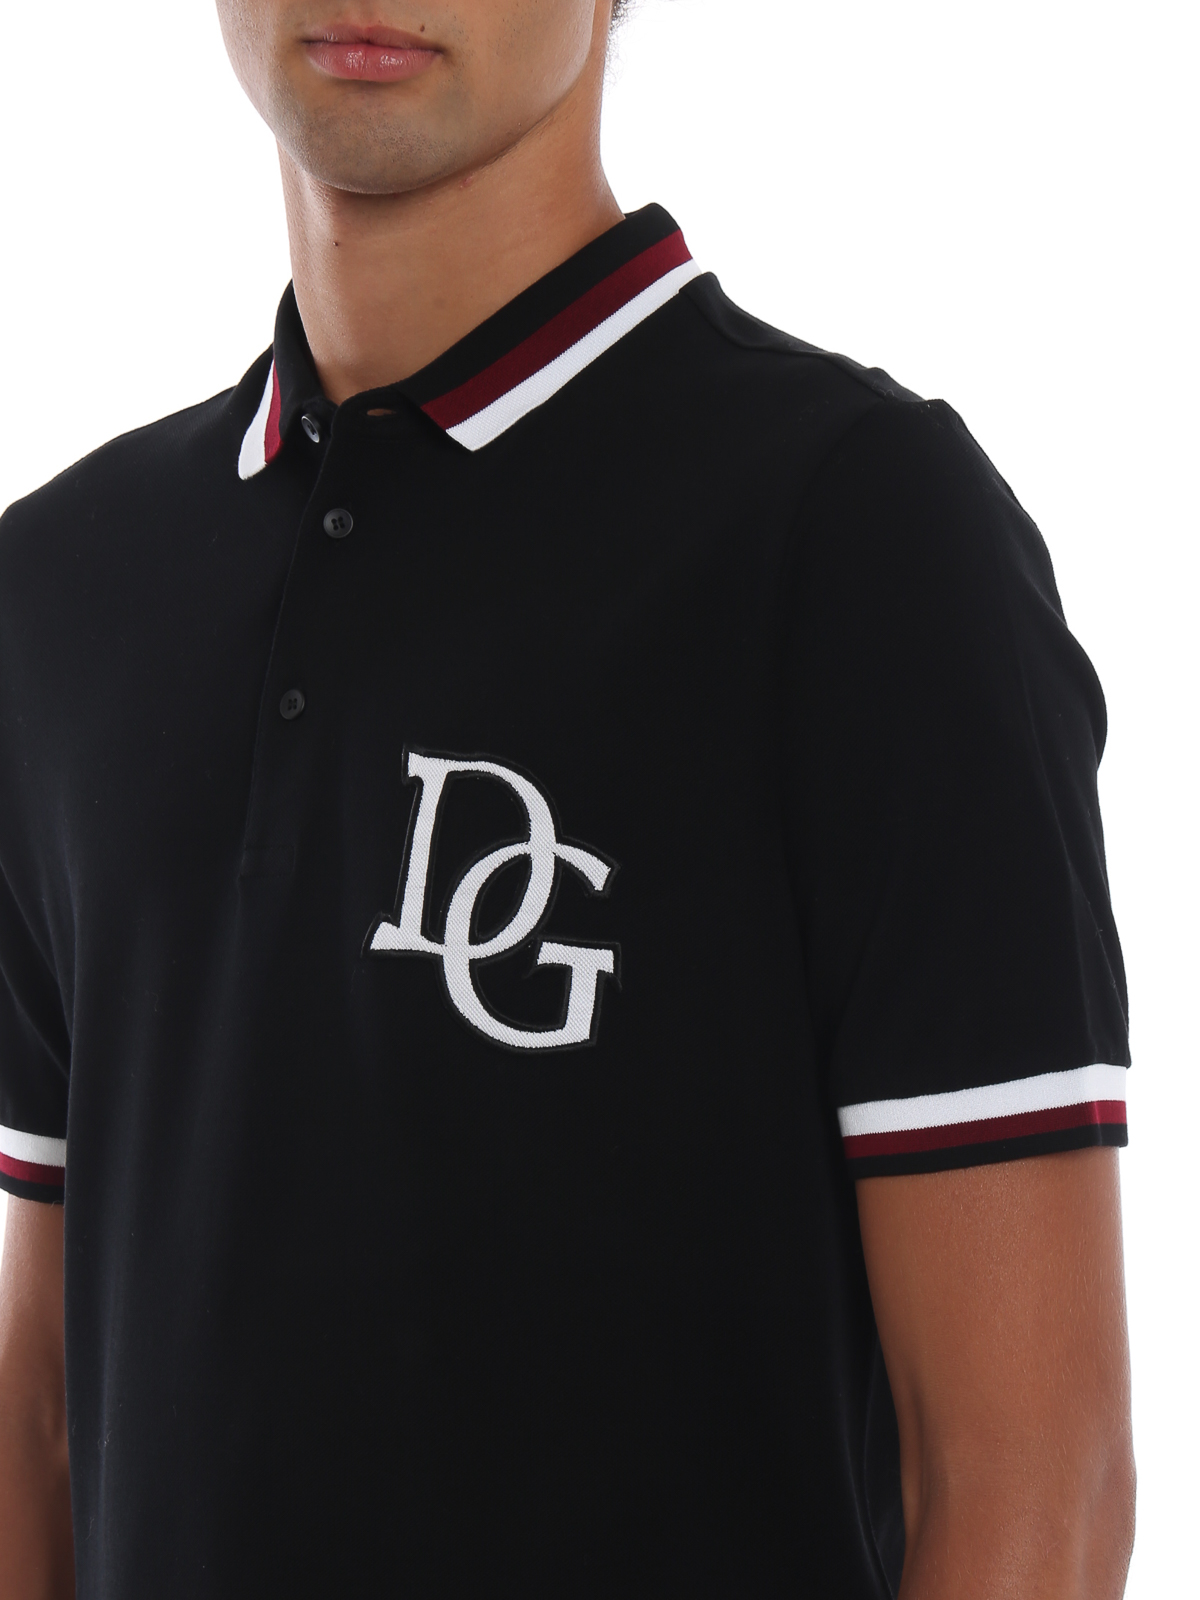 Polo shirts Dolce & Gabbana - #DG Millennials black cotton pique polo shirt  - G8JF1ZG7QAPN0000